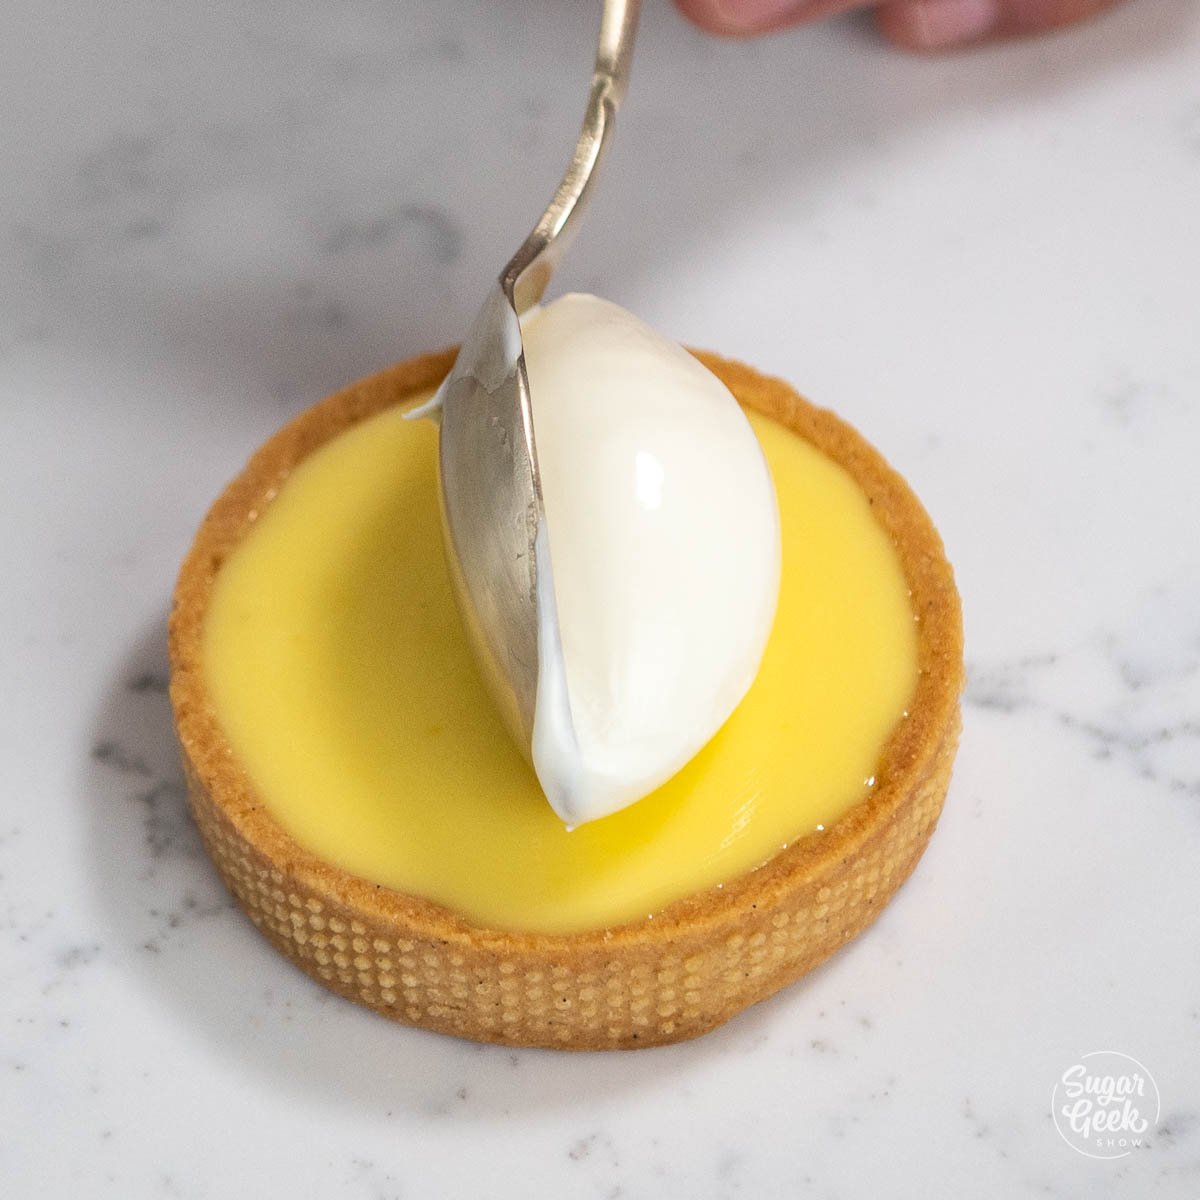 placing a scoop of creme fraiche on lemon tart